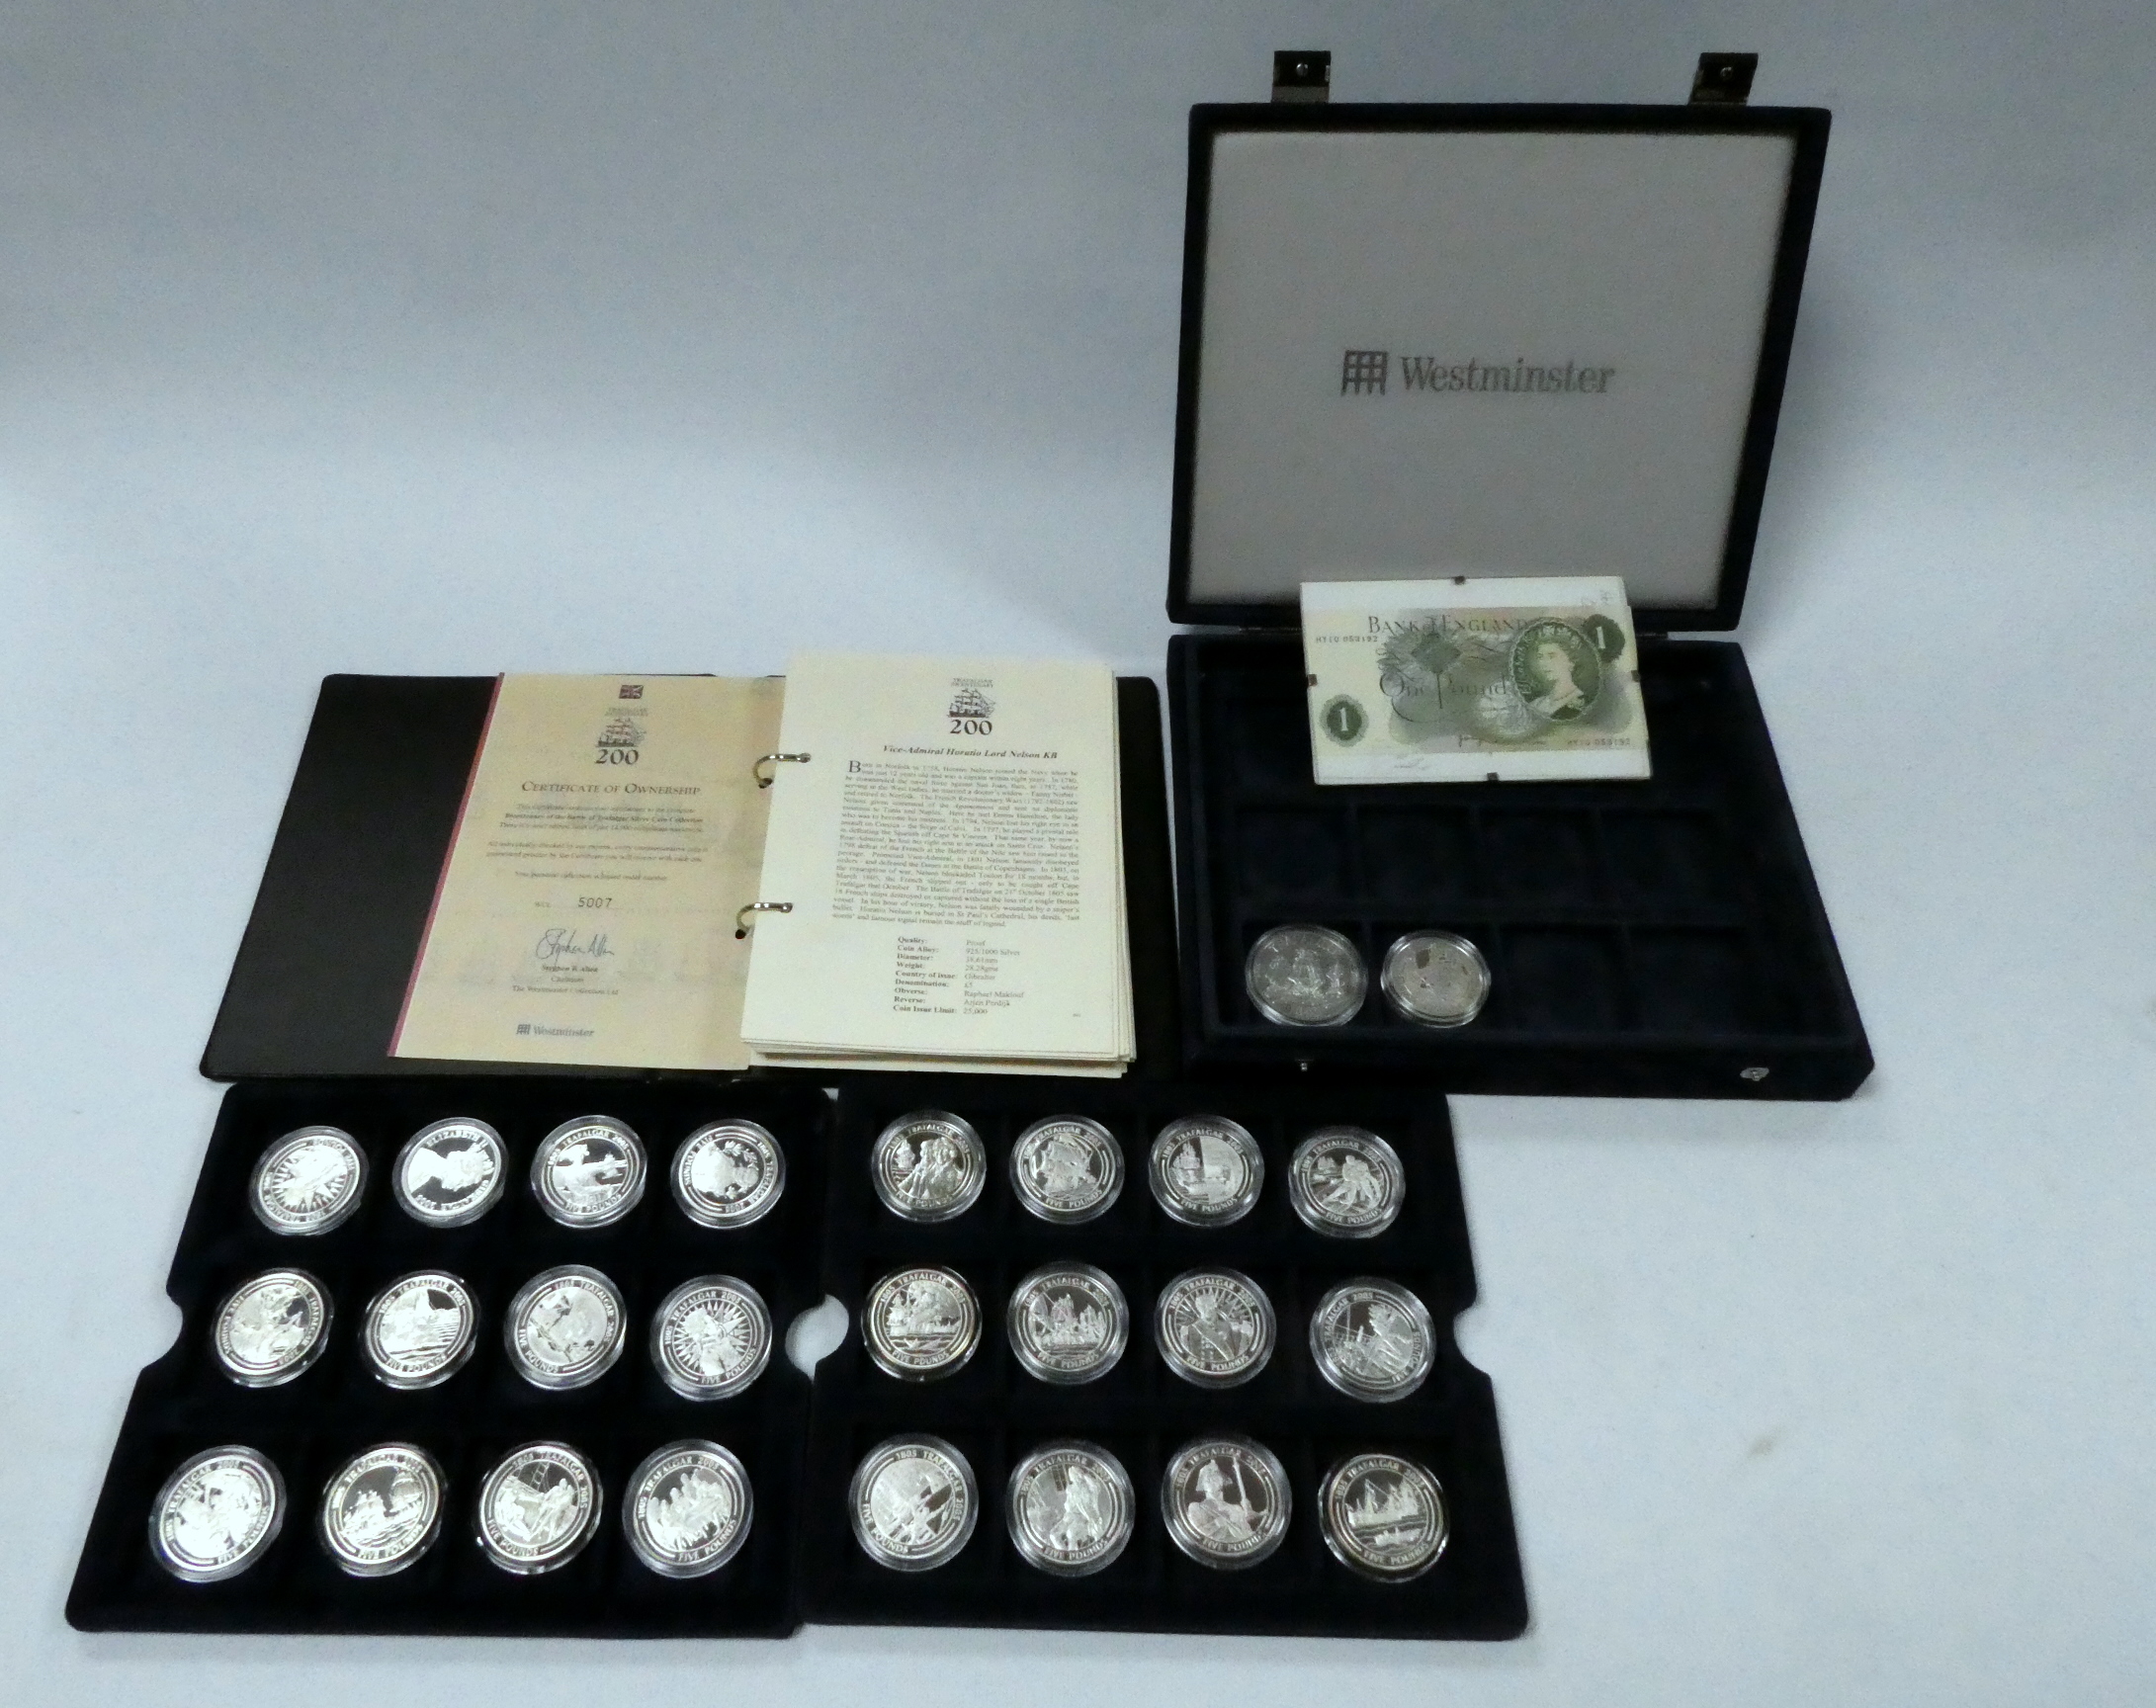 Twenty six silver bullion commemorative Trafalgar crowns - together with a one pound note.